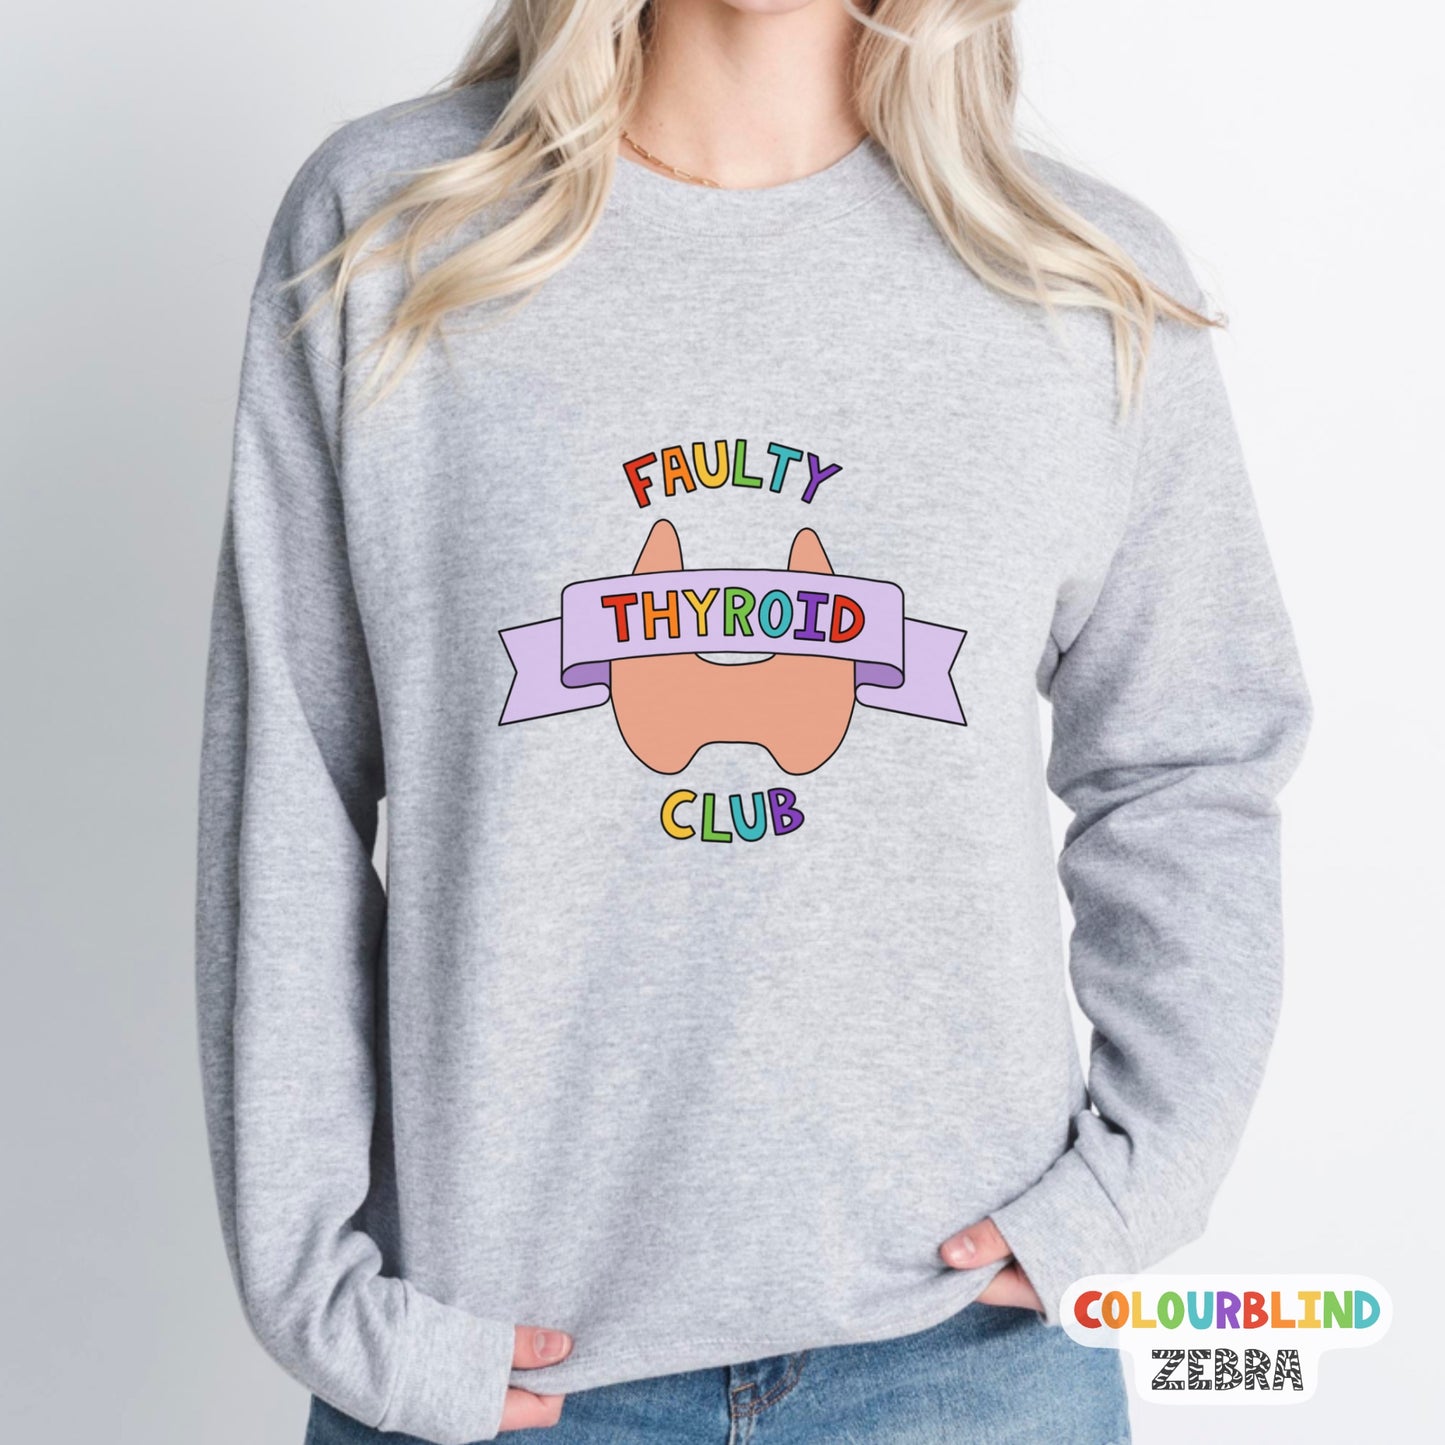 Faulty Thyroid Club Sweatshirt